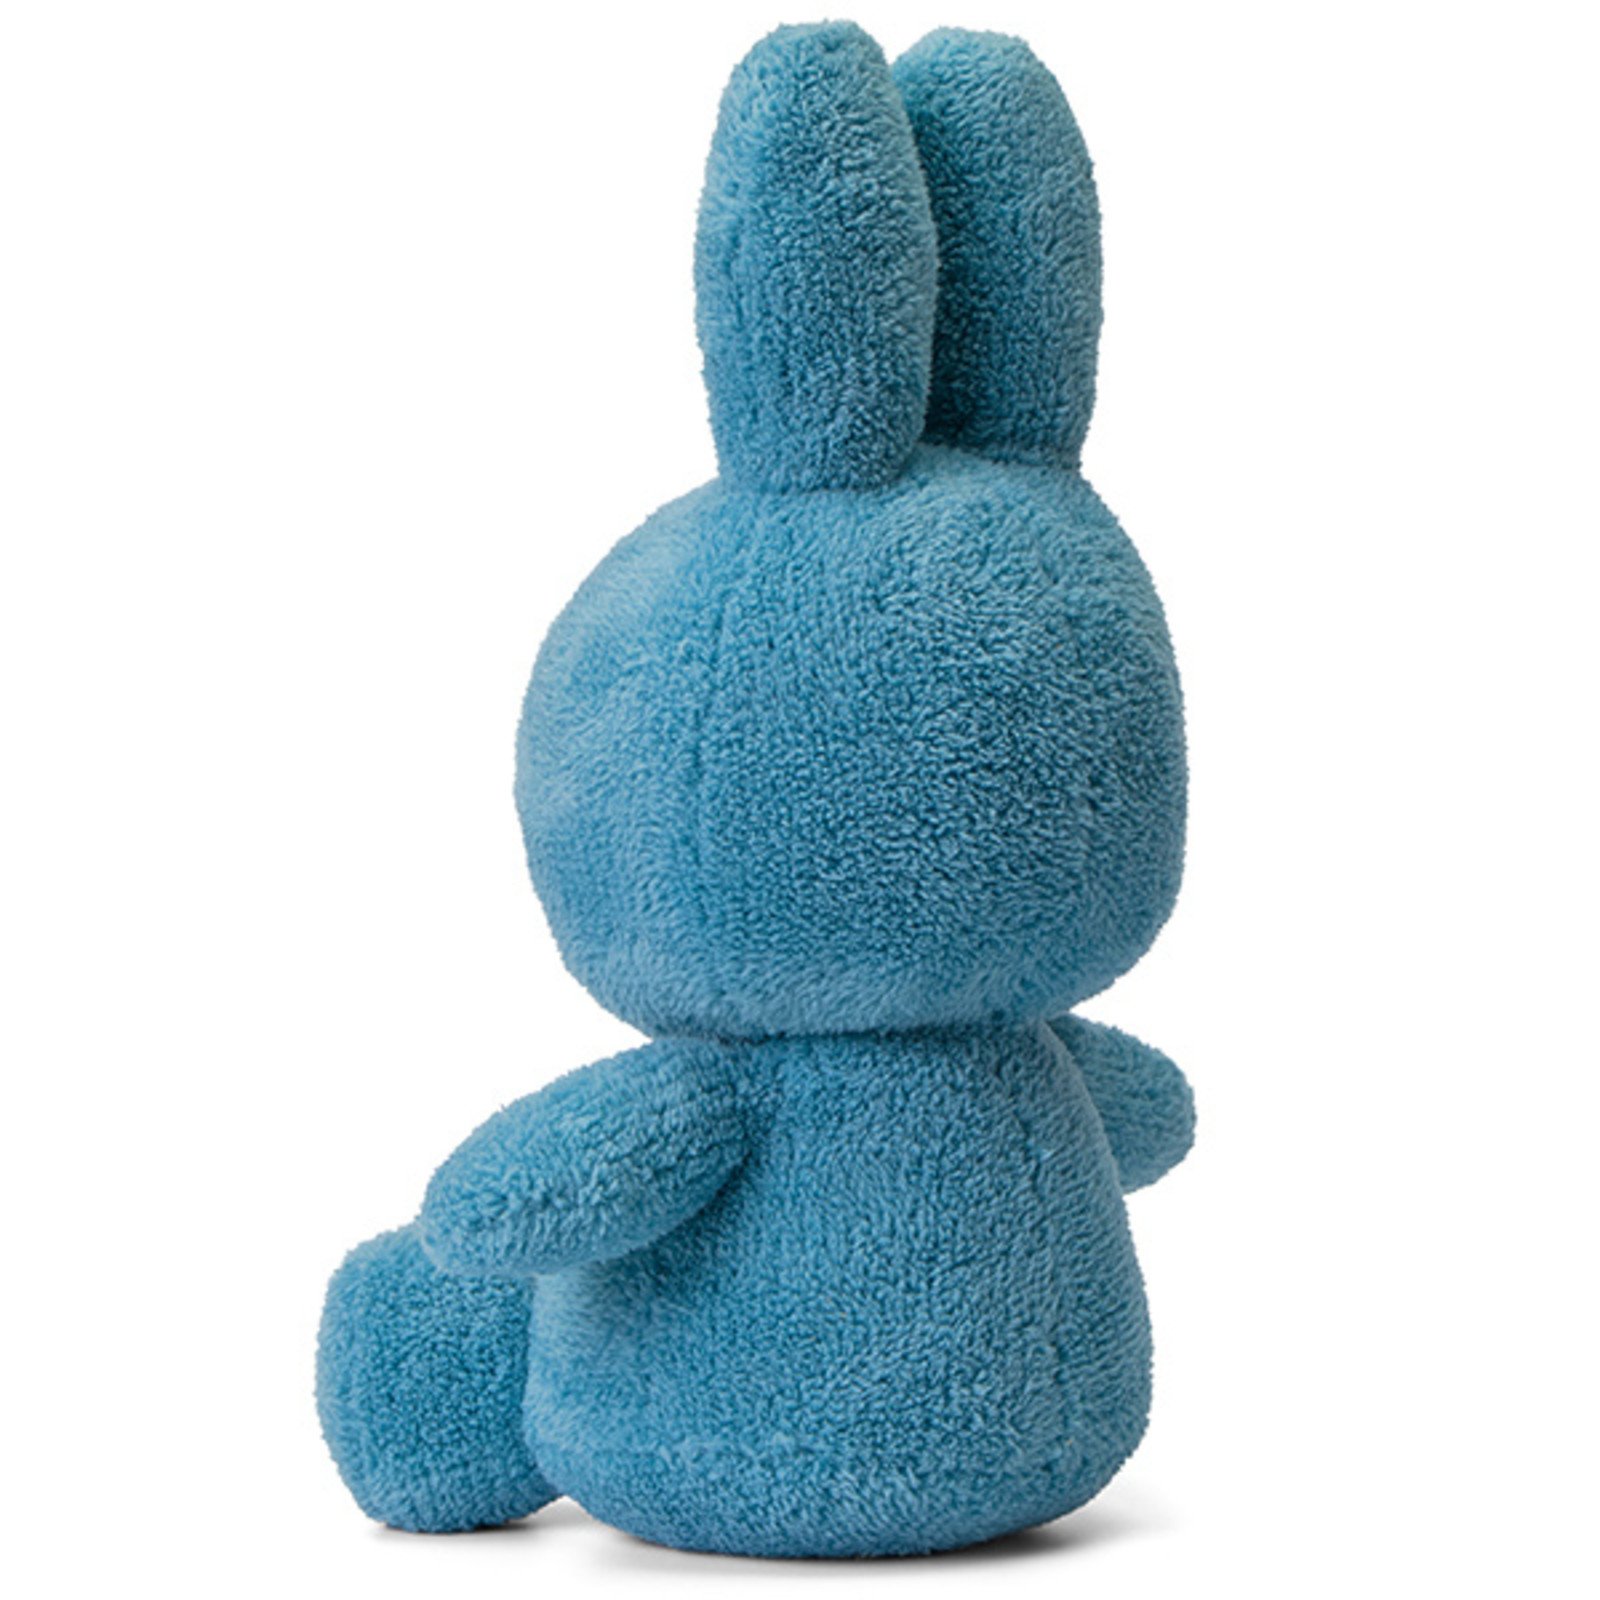 Miffy Sitting Terry Ocean Blue - 33 cm - 13"